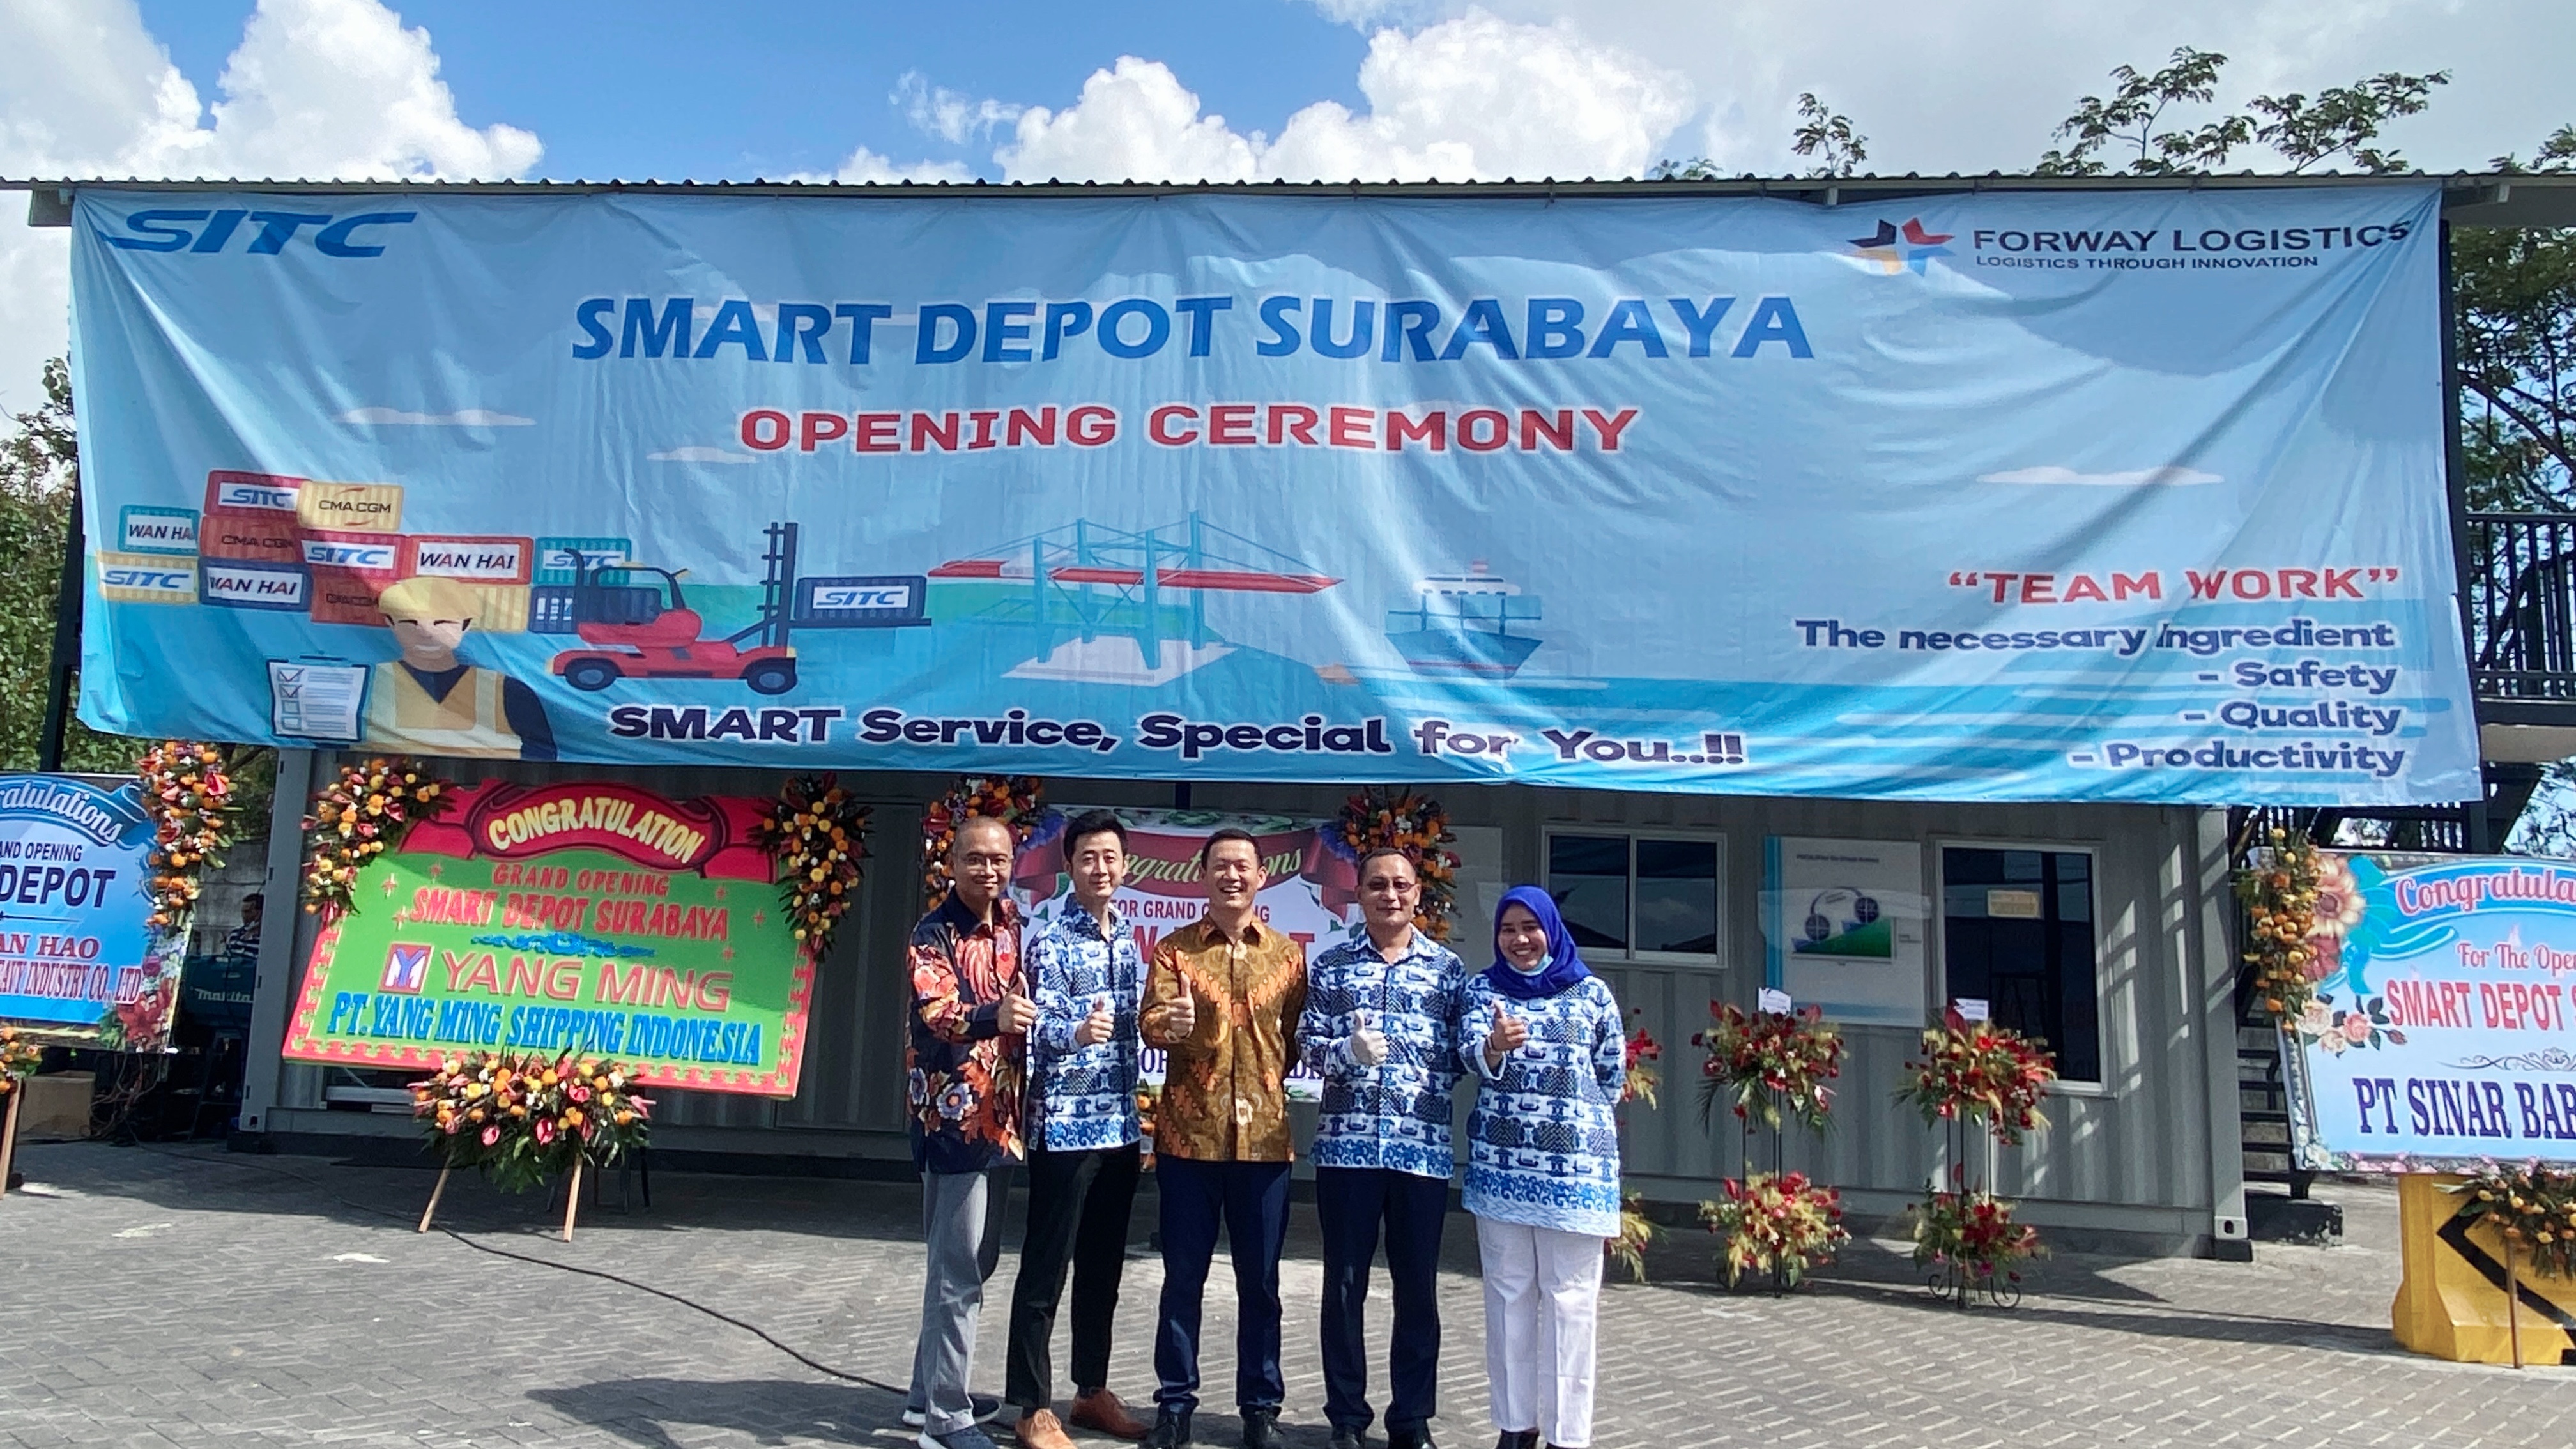 SITC Logistics Indonesia Surabaya Depot was established